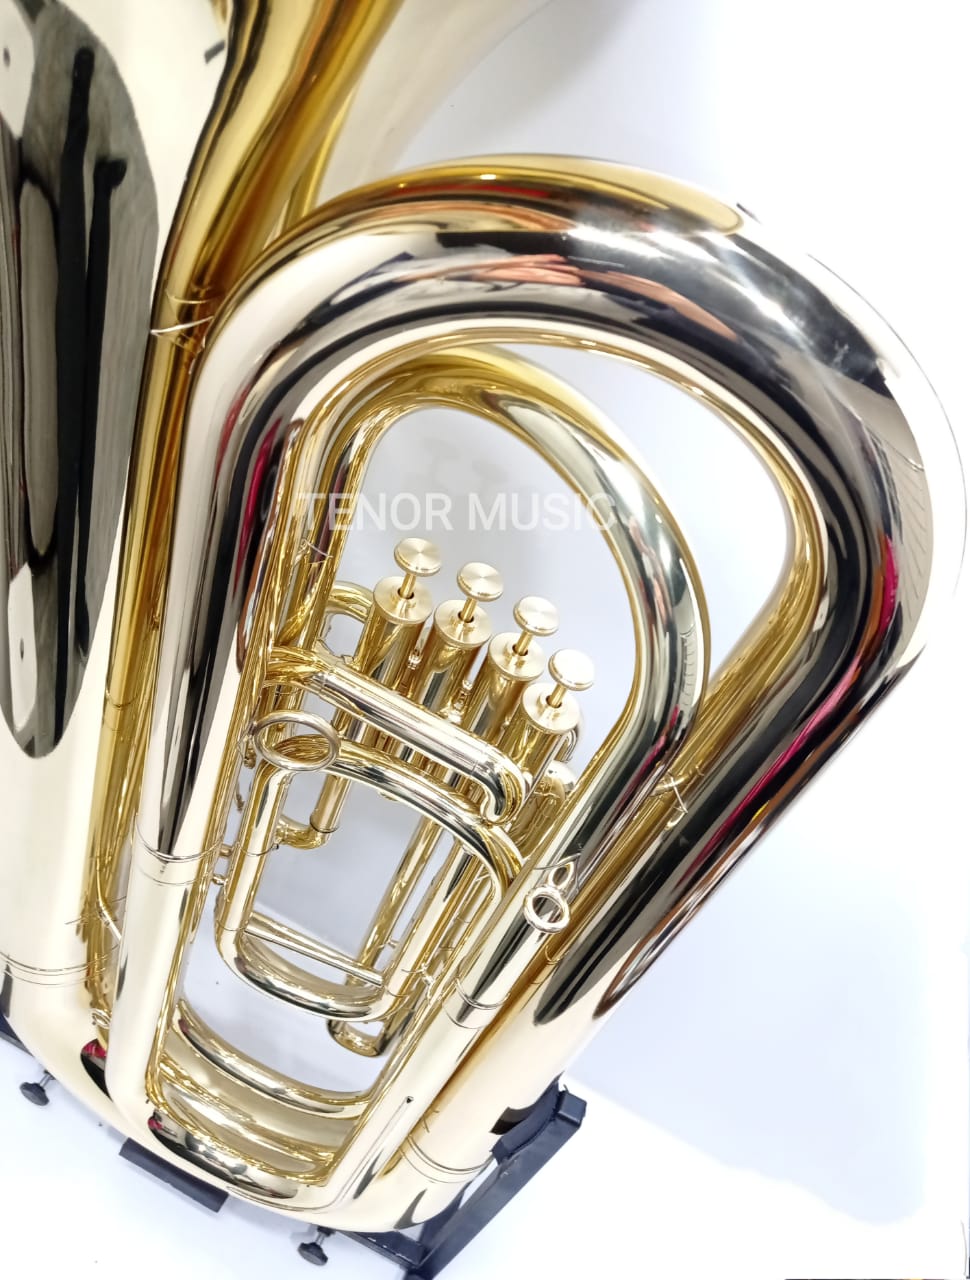 Tuba Hs Musical R751 Sib 4/4 4 Pistos Nova